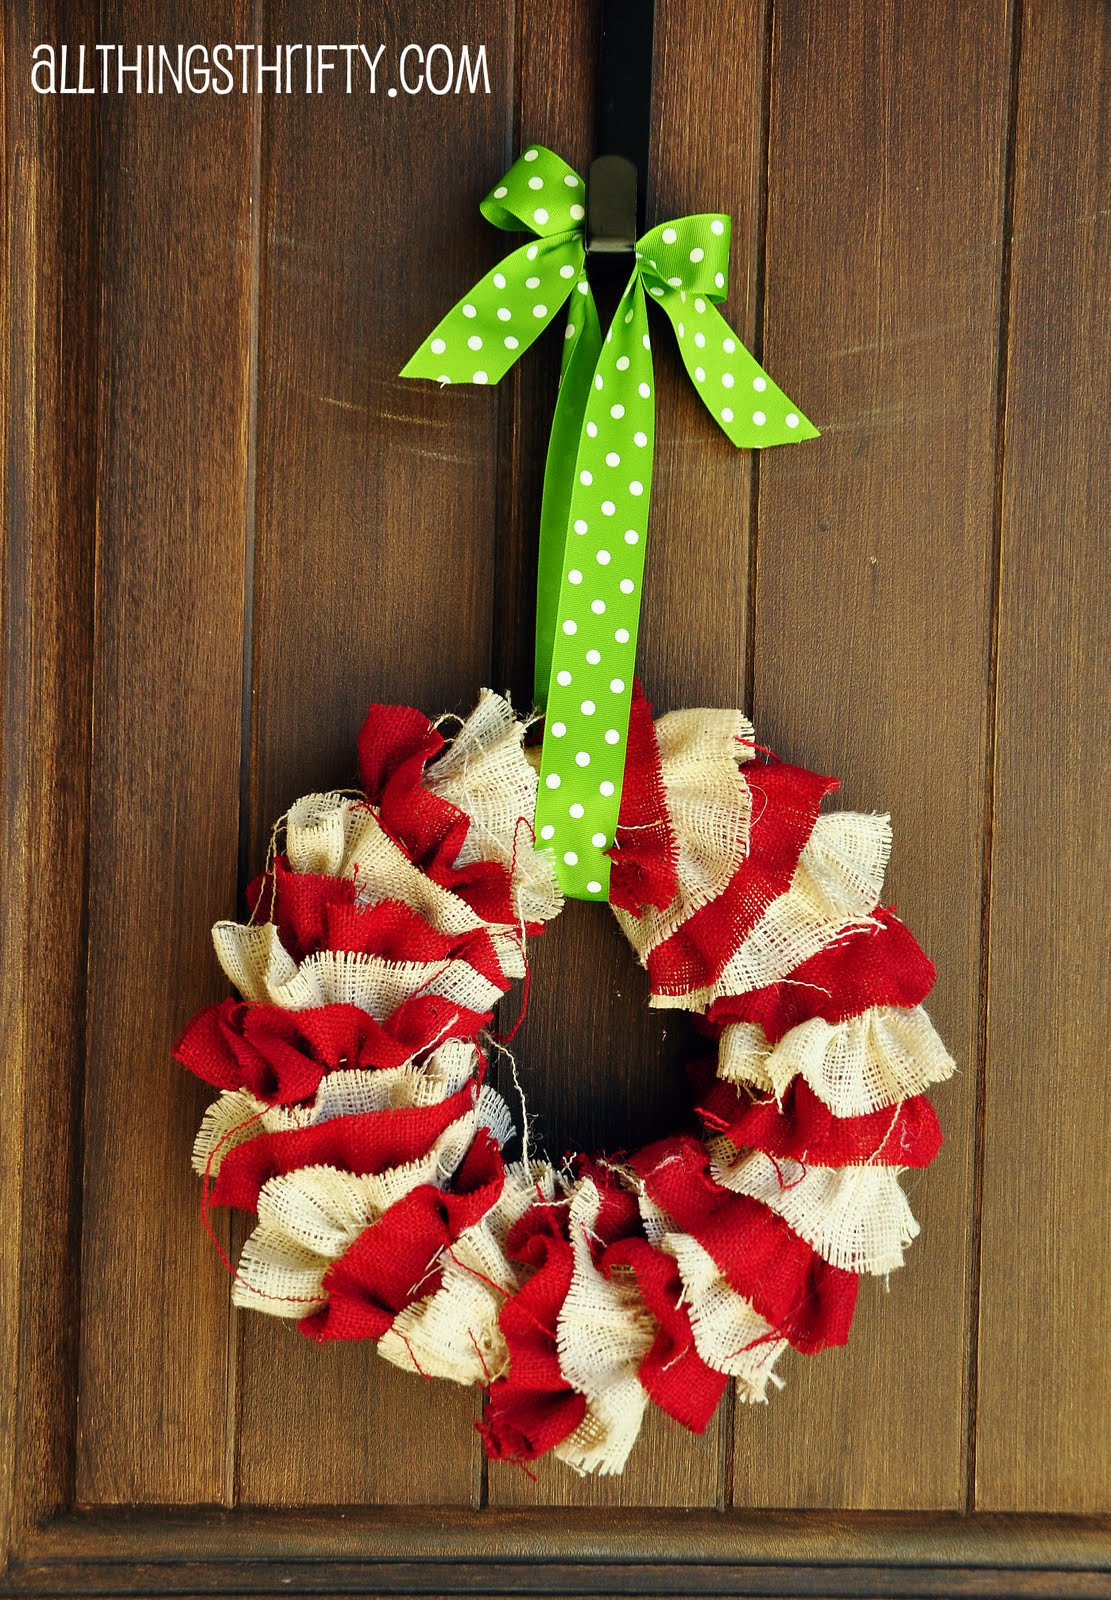 Best ideas about DIY Wreath Christmas
. Save or Pin Tutorial DIY Christmas Wreath Now.